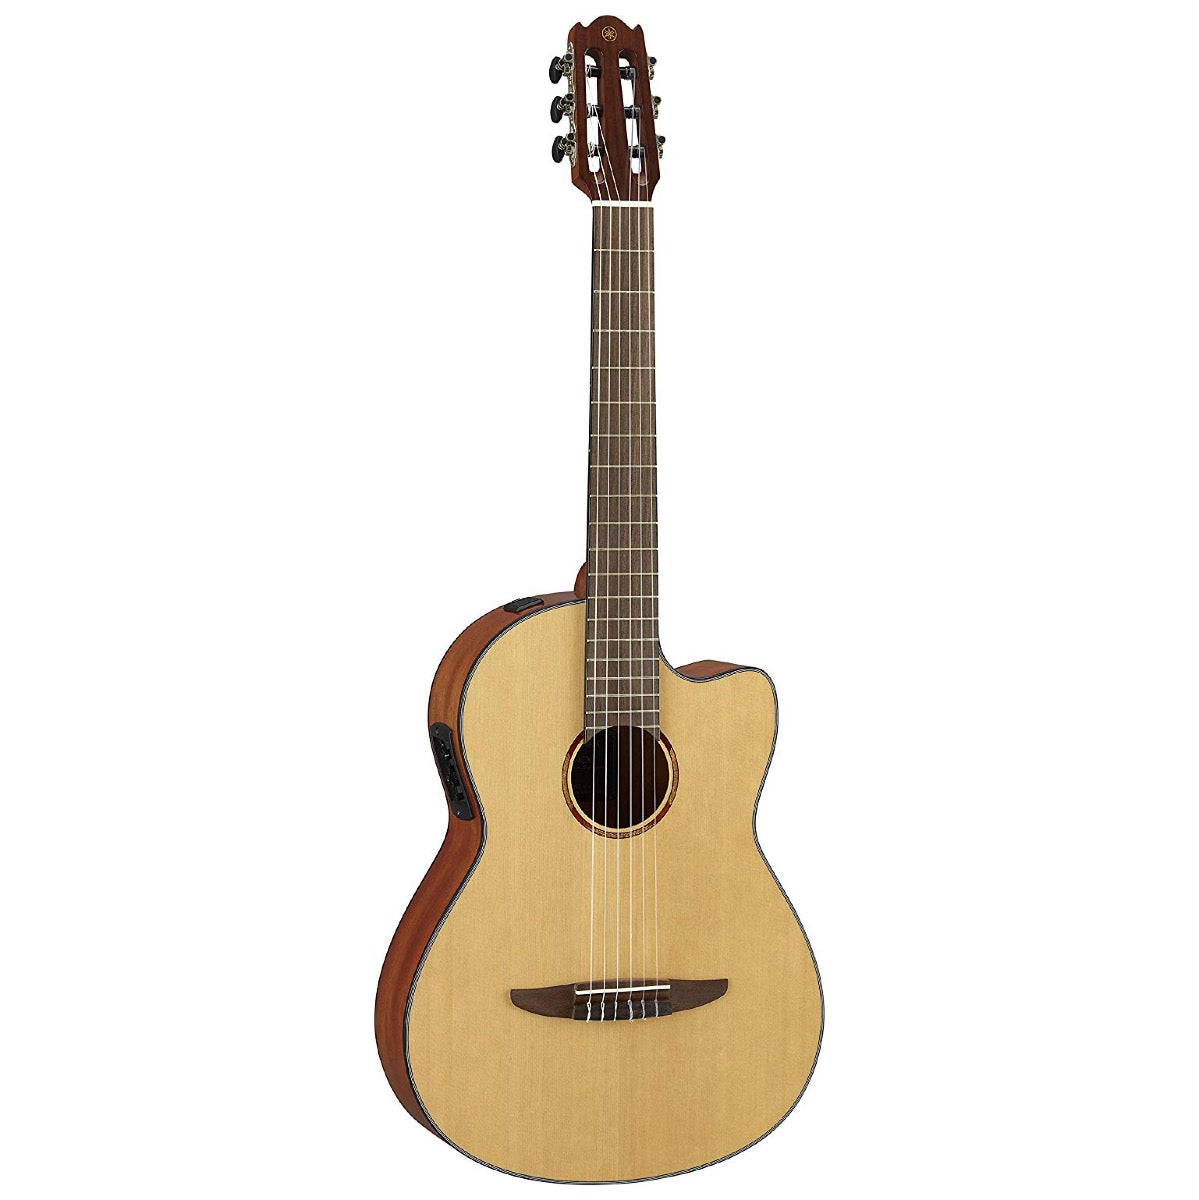 Yamaha NCX1 NX Series Acoustic Electric Nylon String Guitar (NCX1)